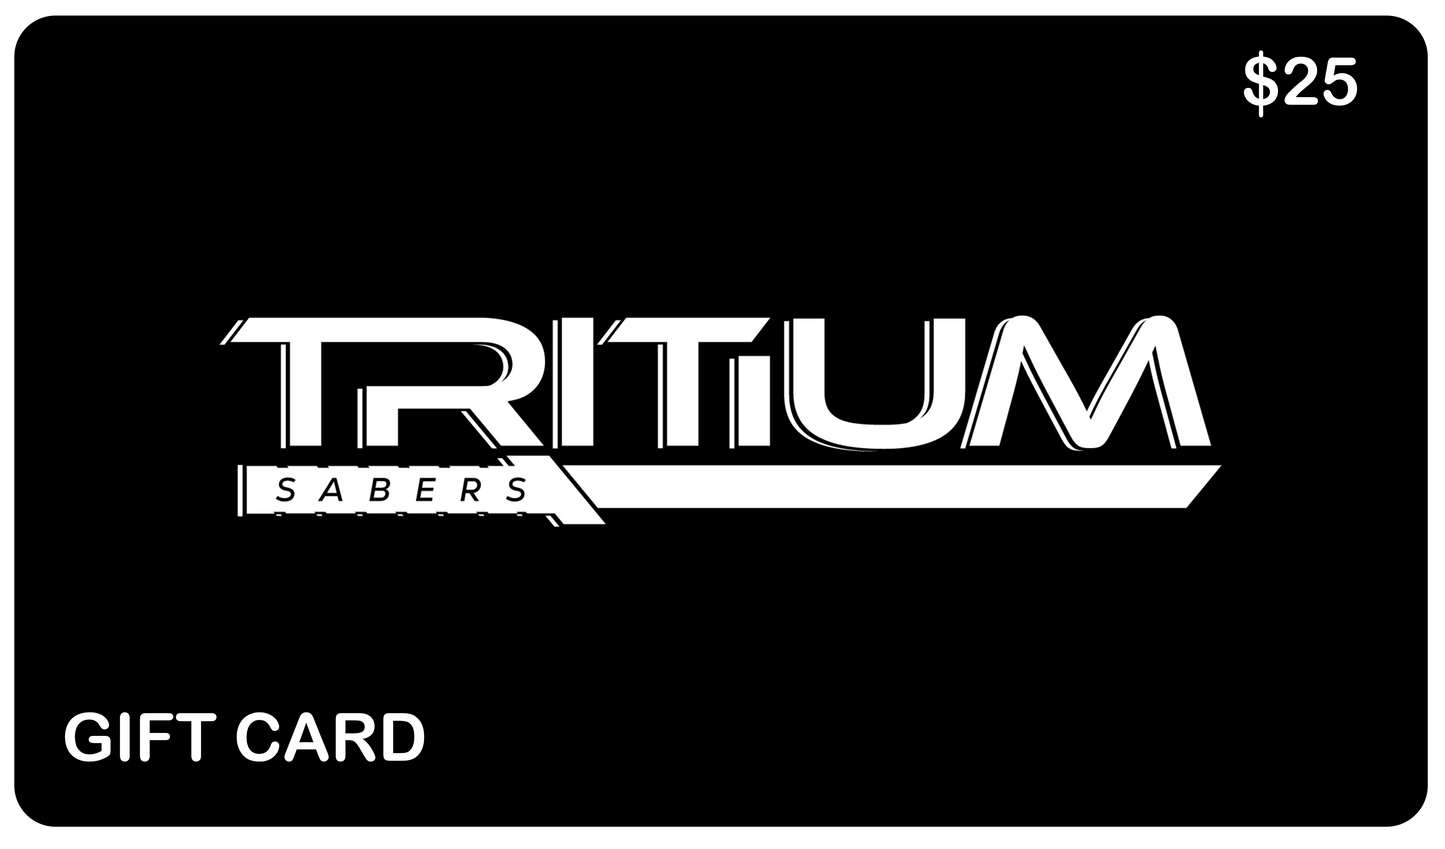 Tritium Sabers Gift Card